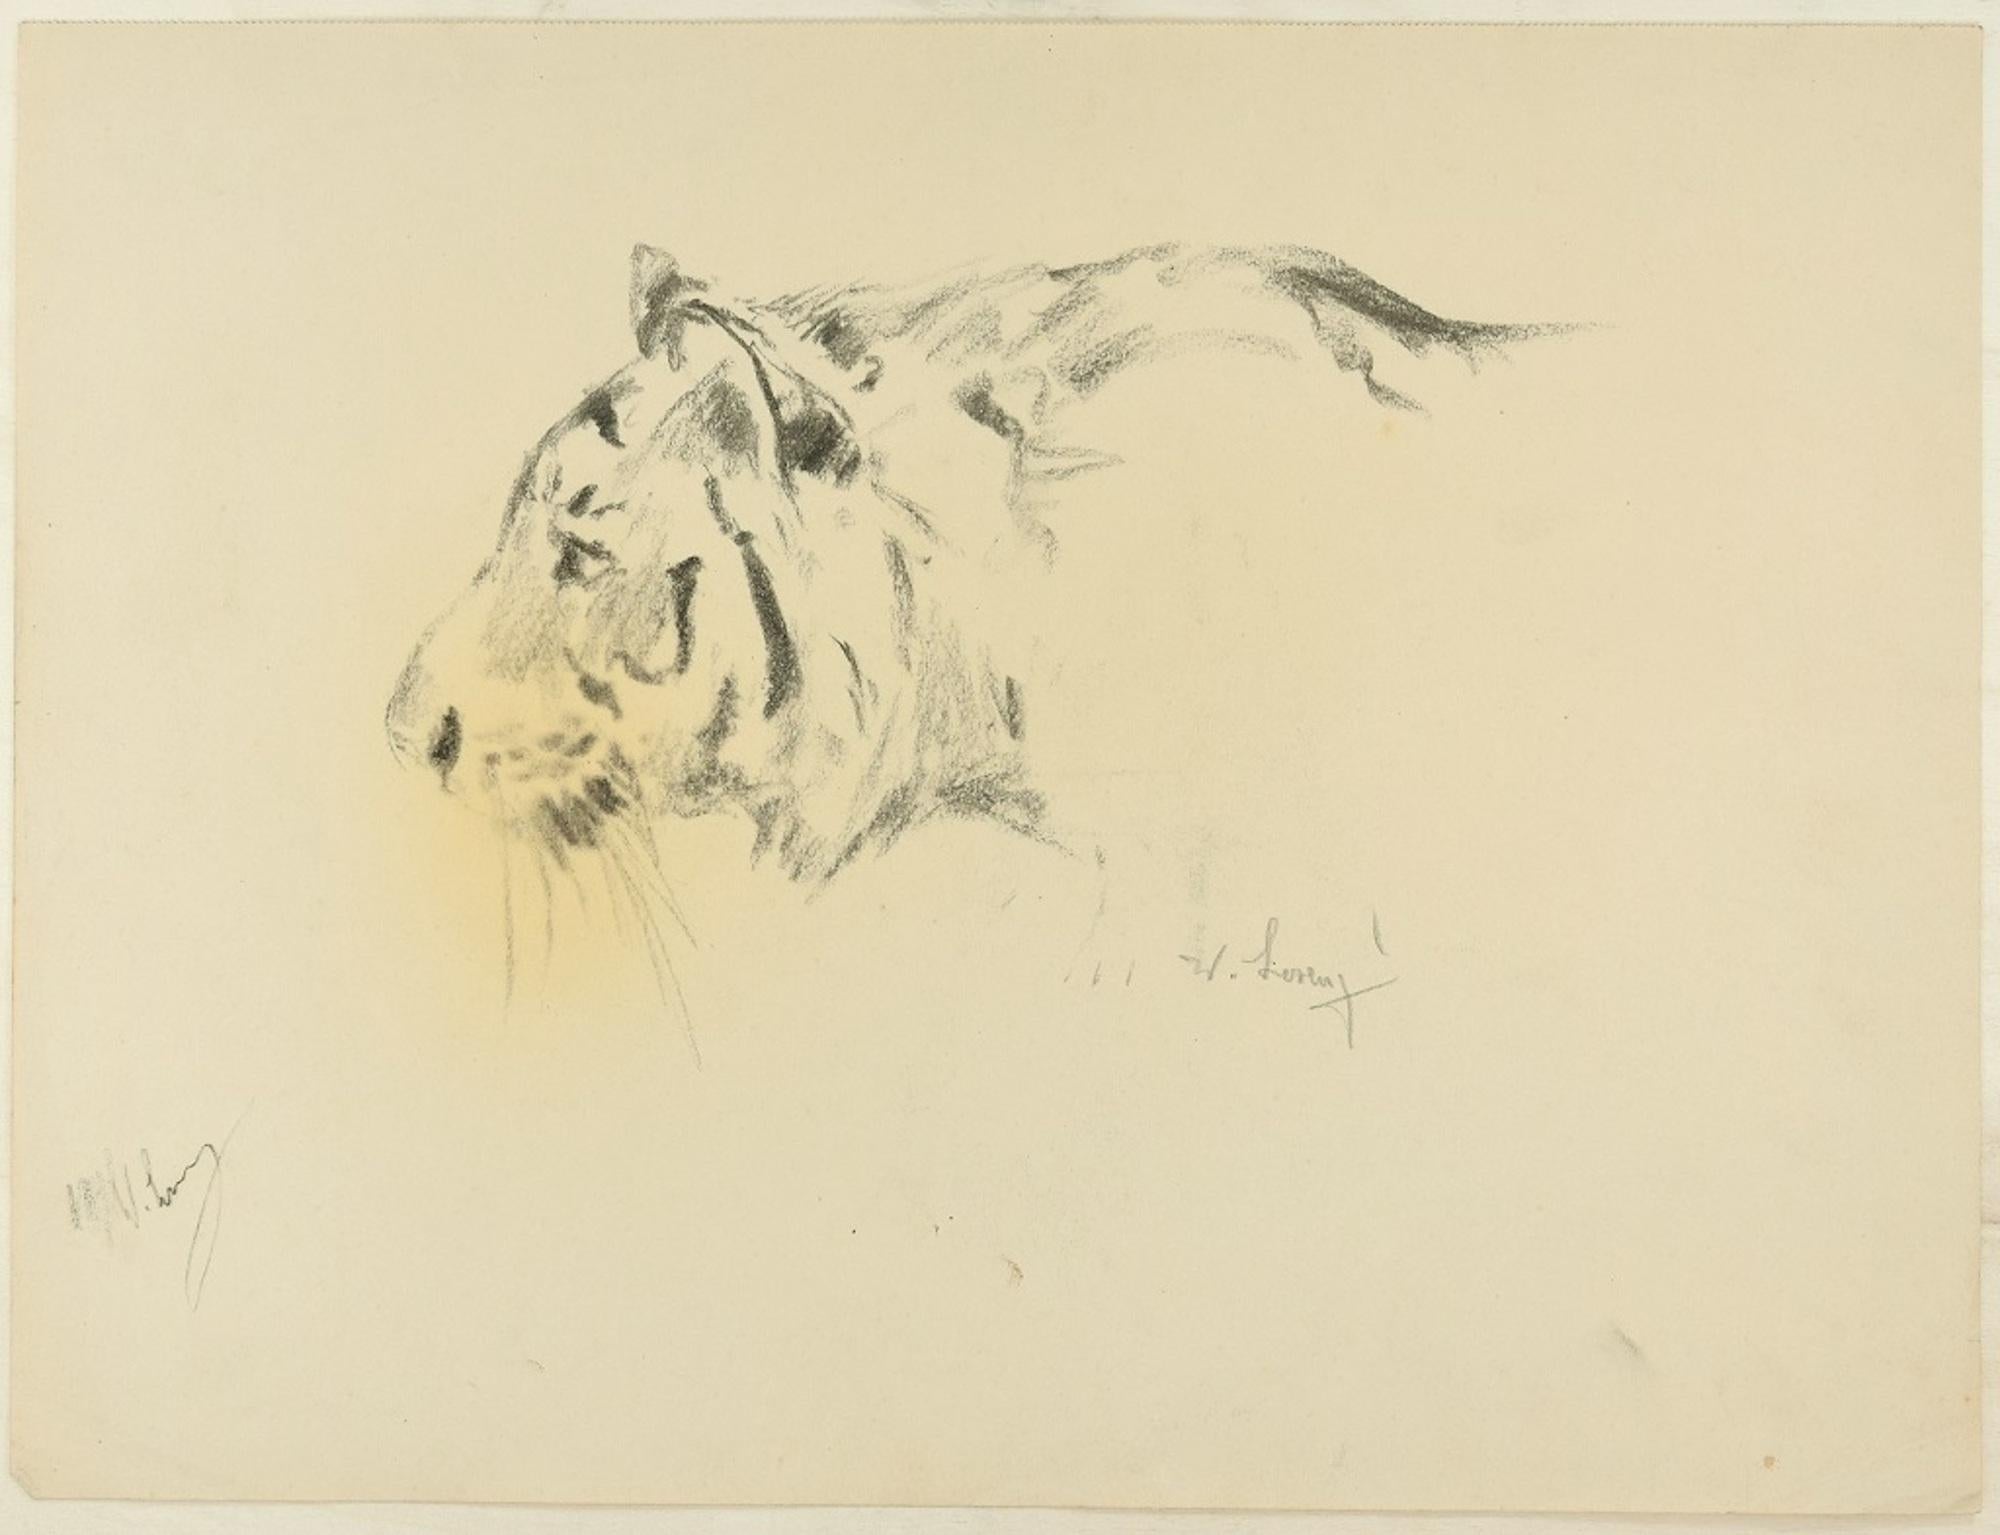 Animal Art Wilhelm Lorenz - Le profil d'un tigre - dessin original au fusain de Willy Lorenz - années 1940